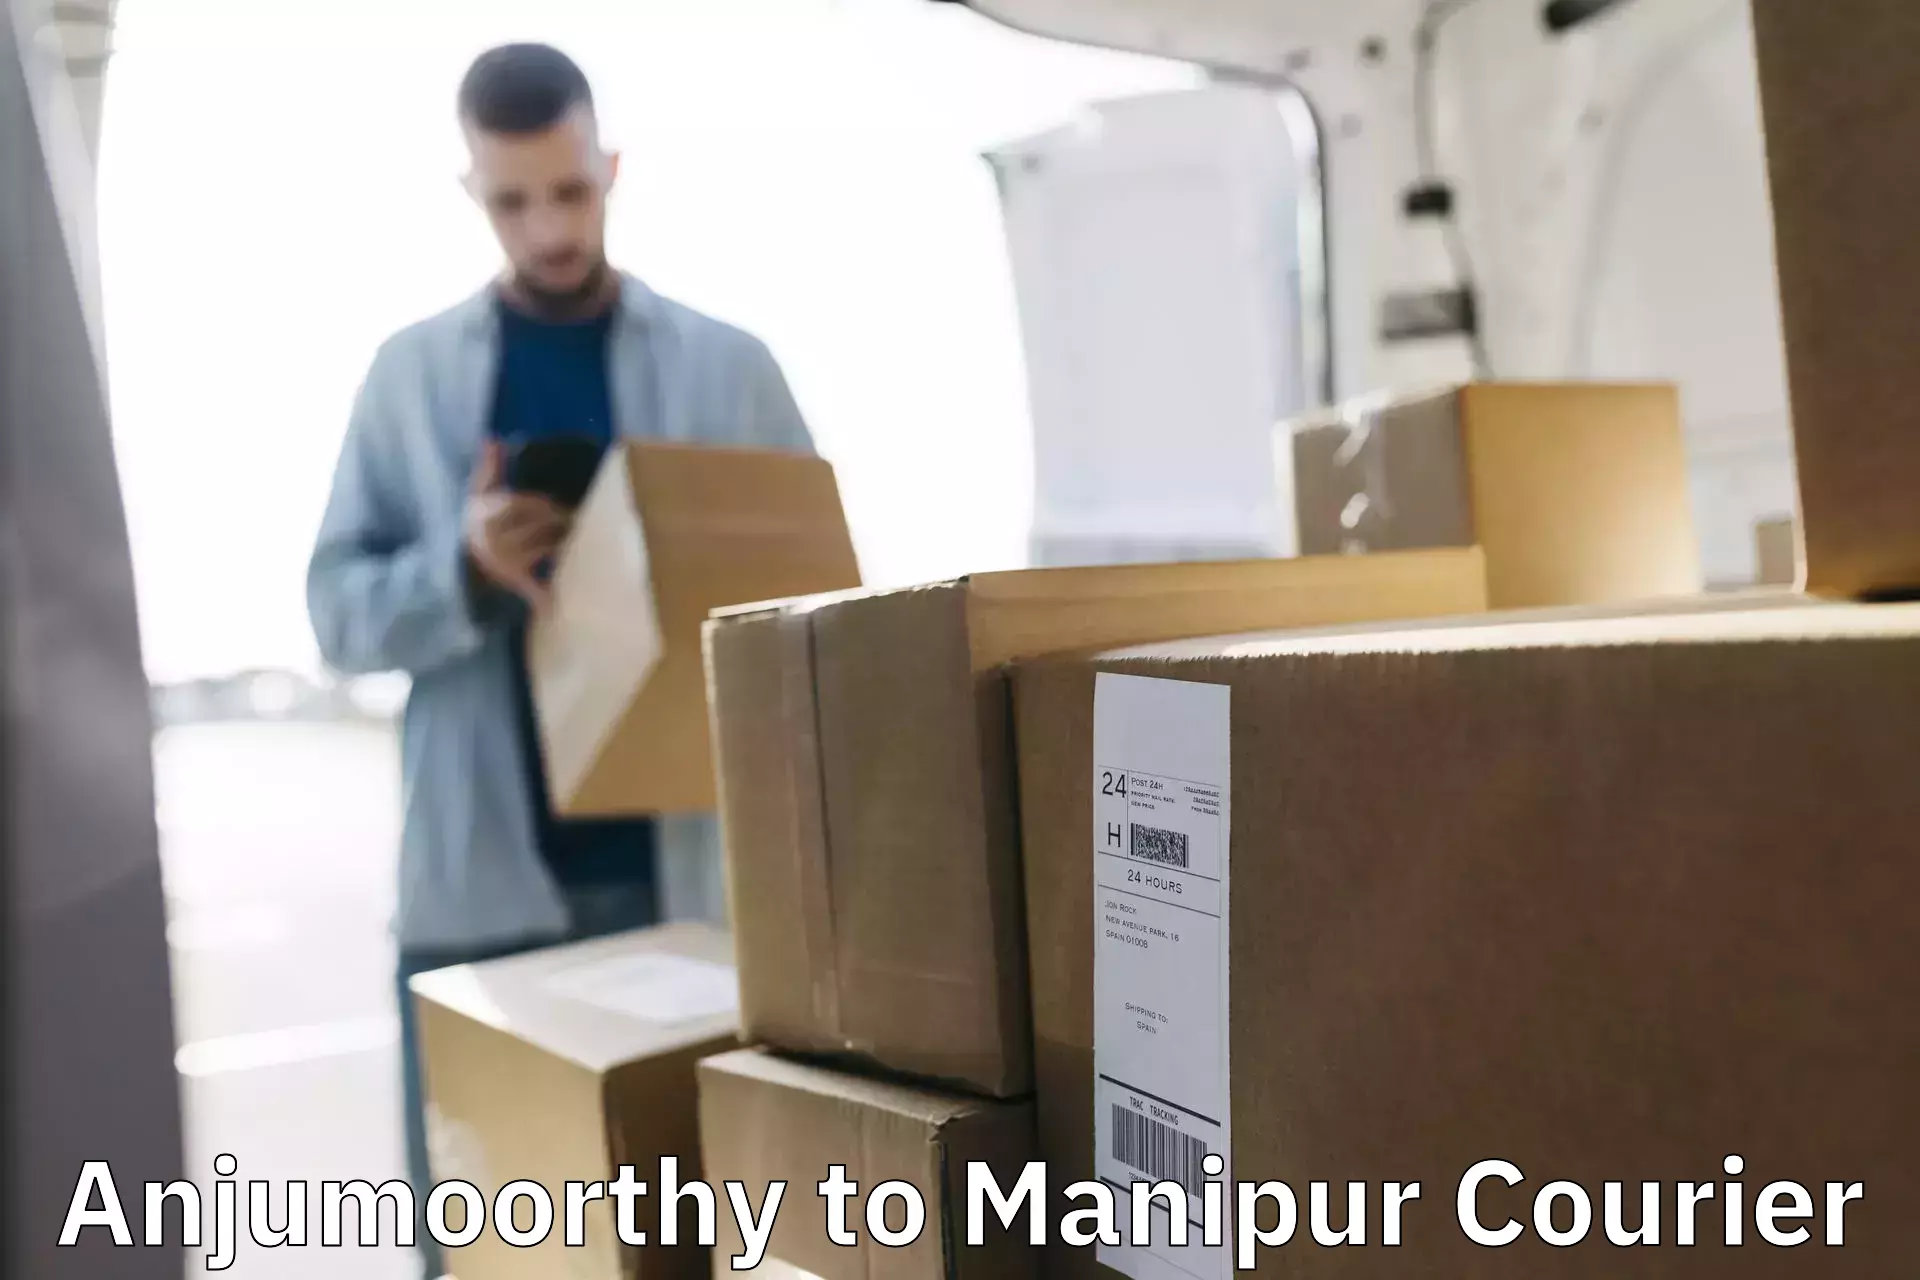 International parcel service Anjumoorthy to Manipur